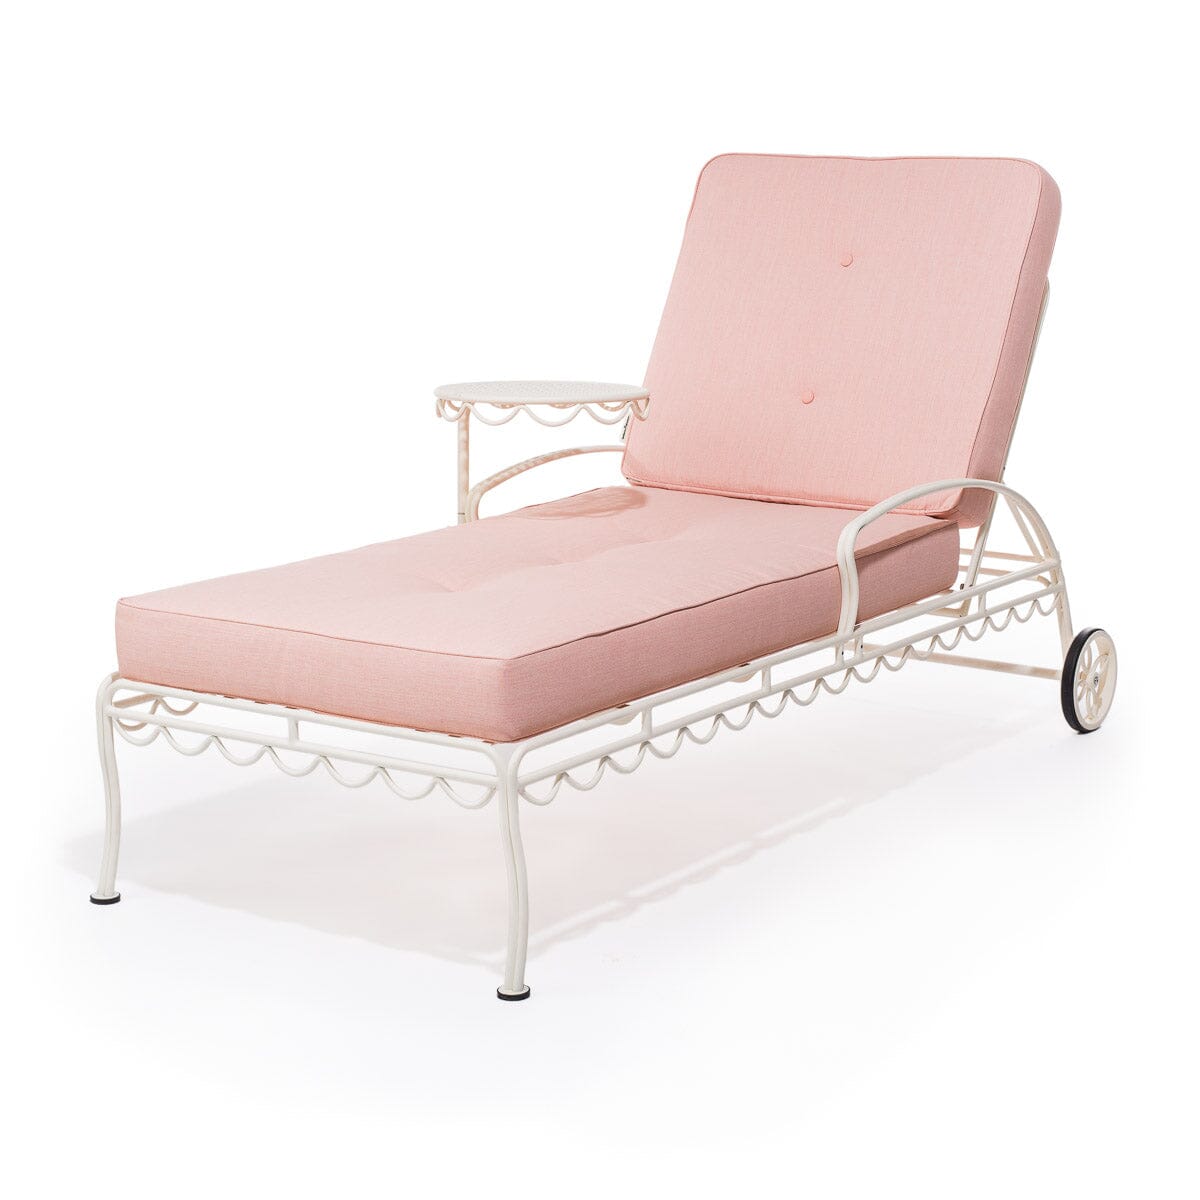 The Al Fresco Sun Lounger Cushion - Dusty Pink Al Fresco Sun Lounger Cushions Business & Pleasure Co 